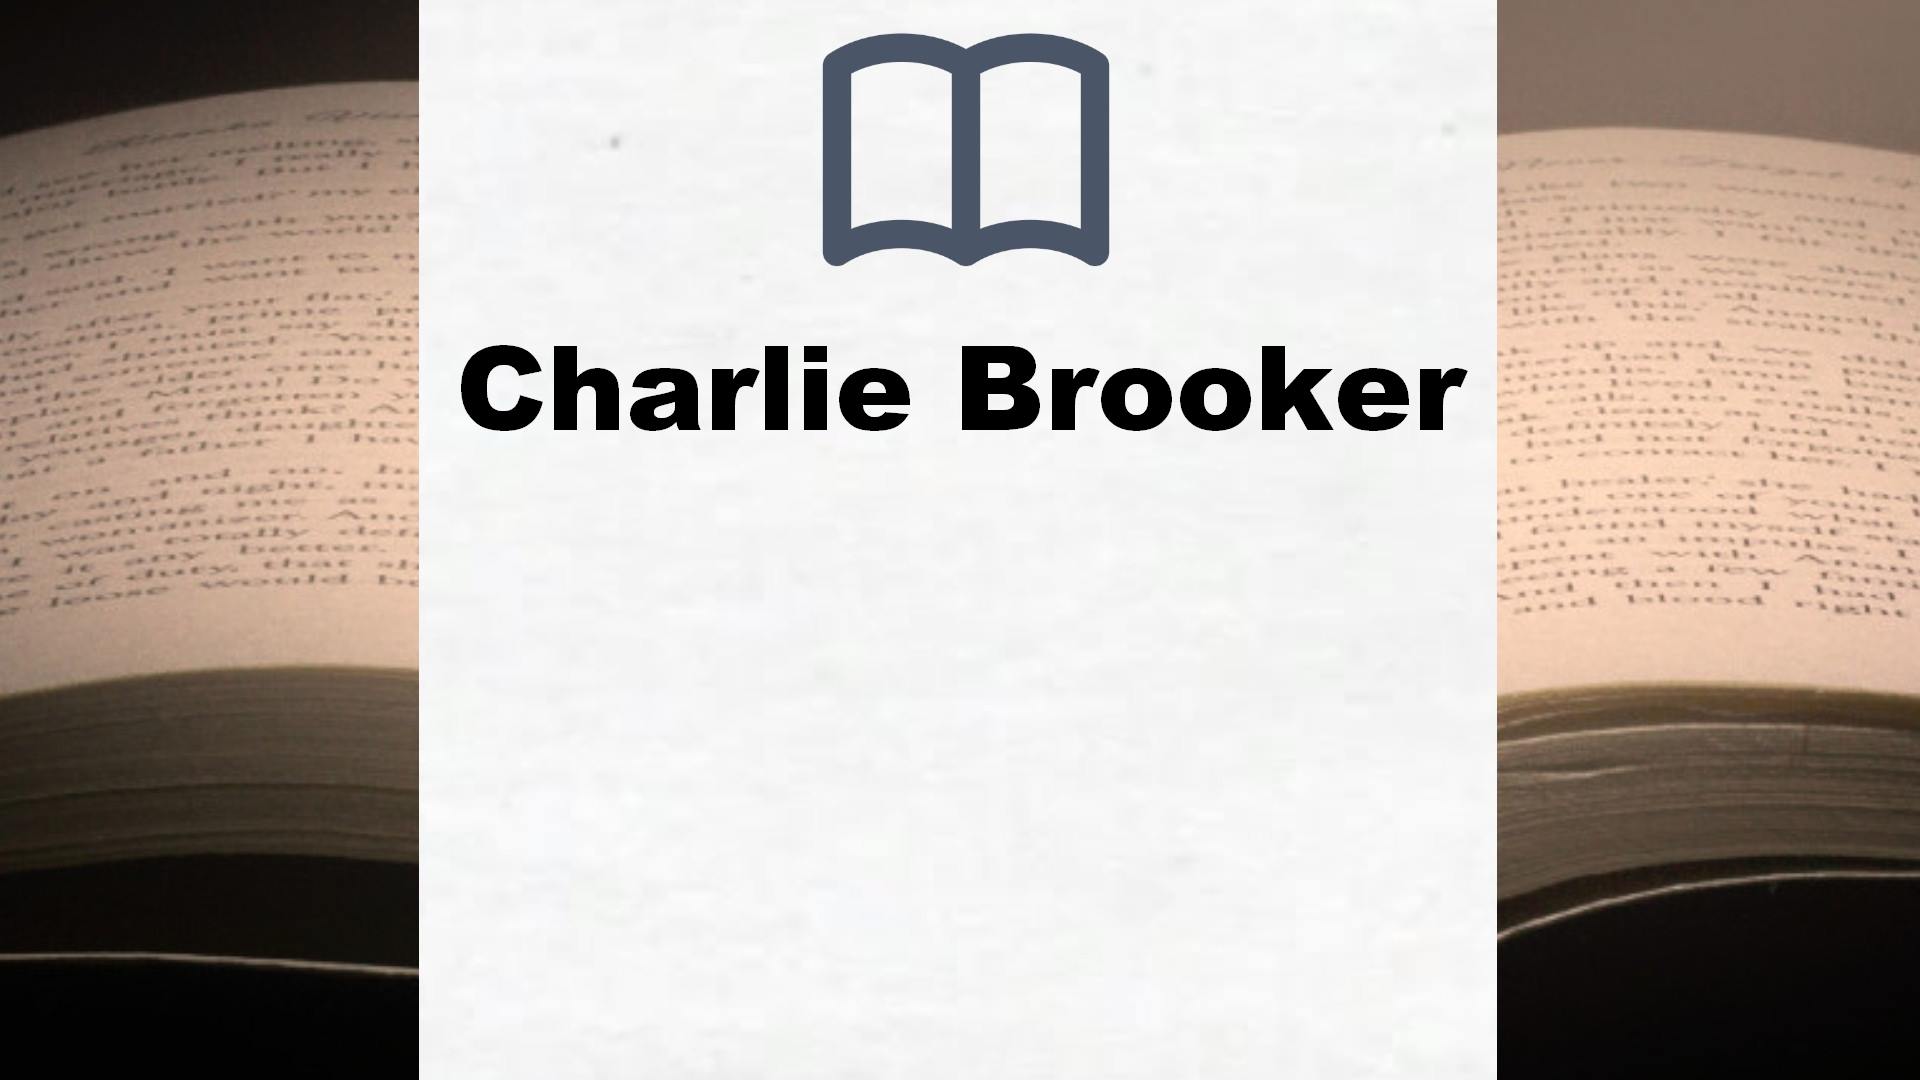 Libros Charlie Brooker